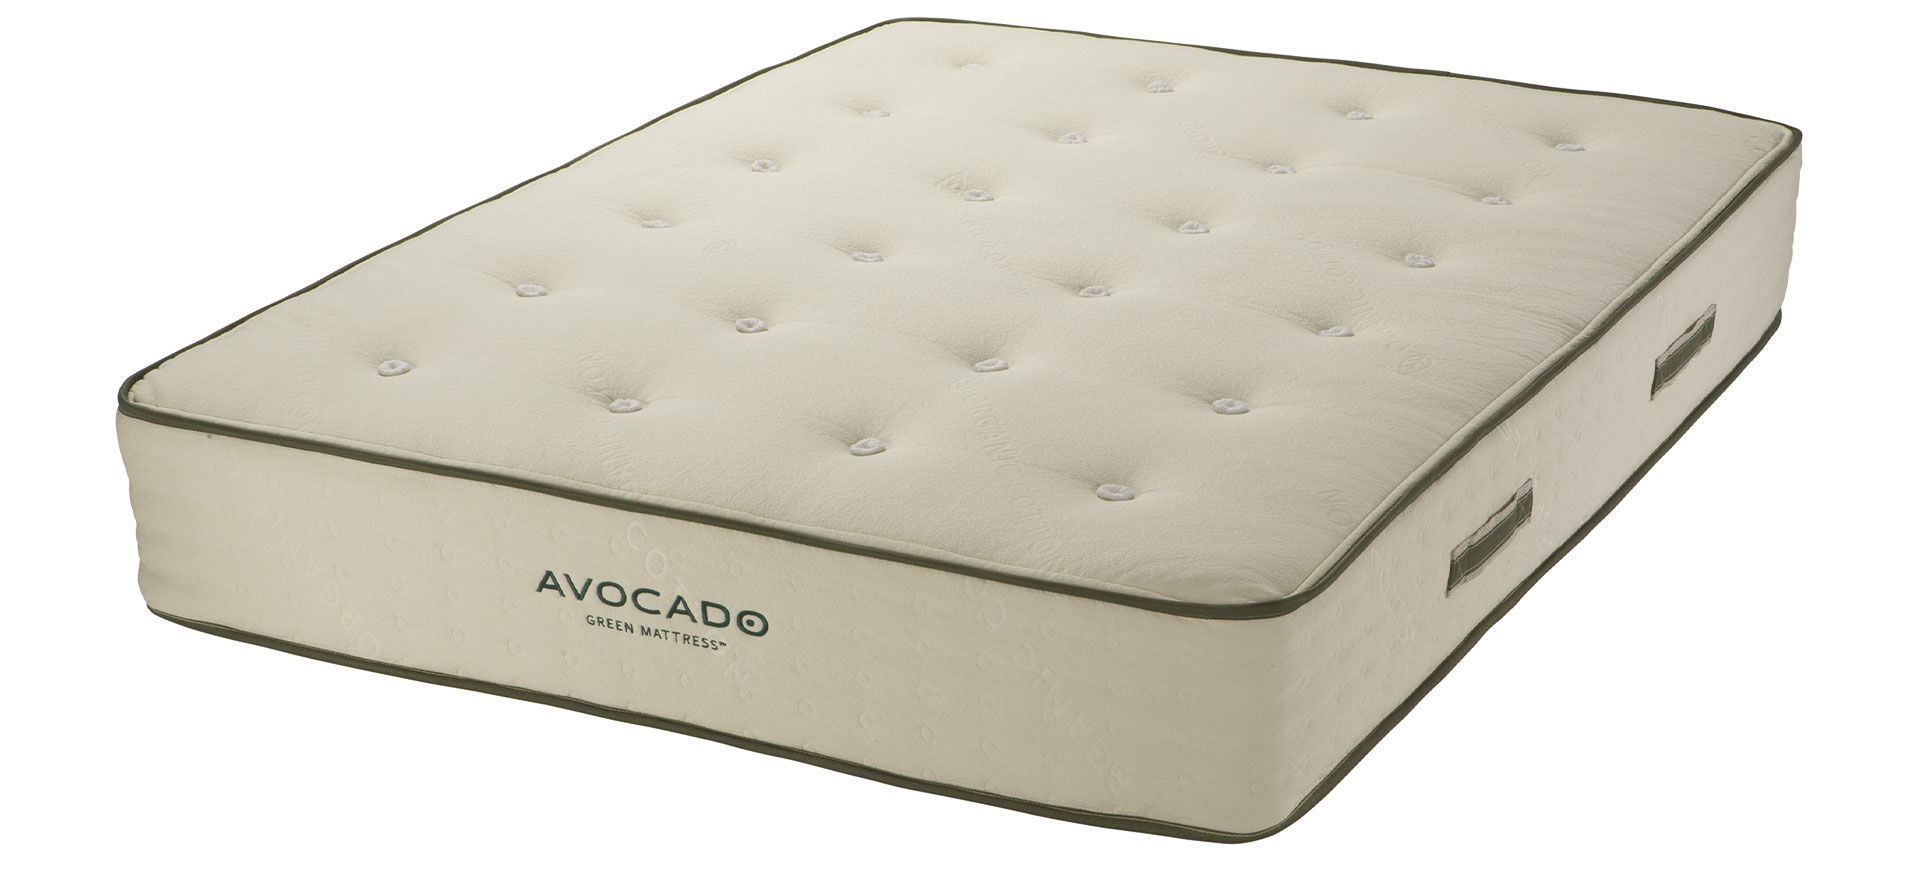 Avocado green mattress.